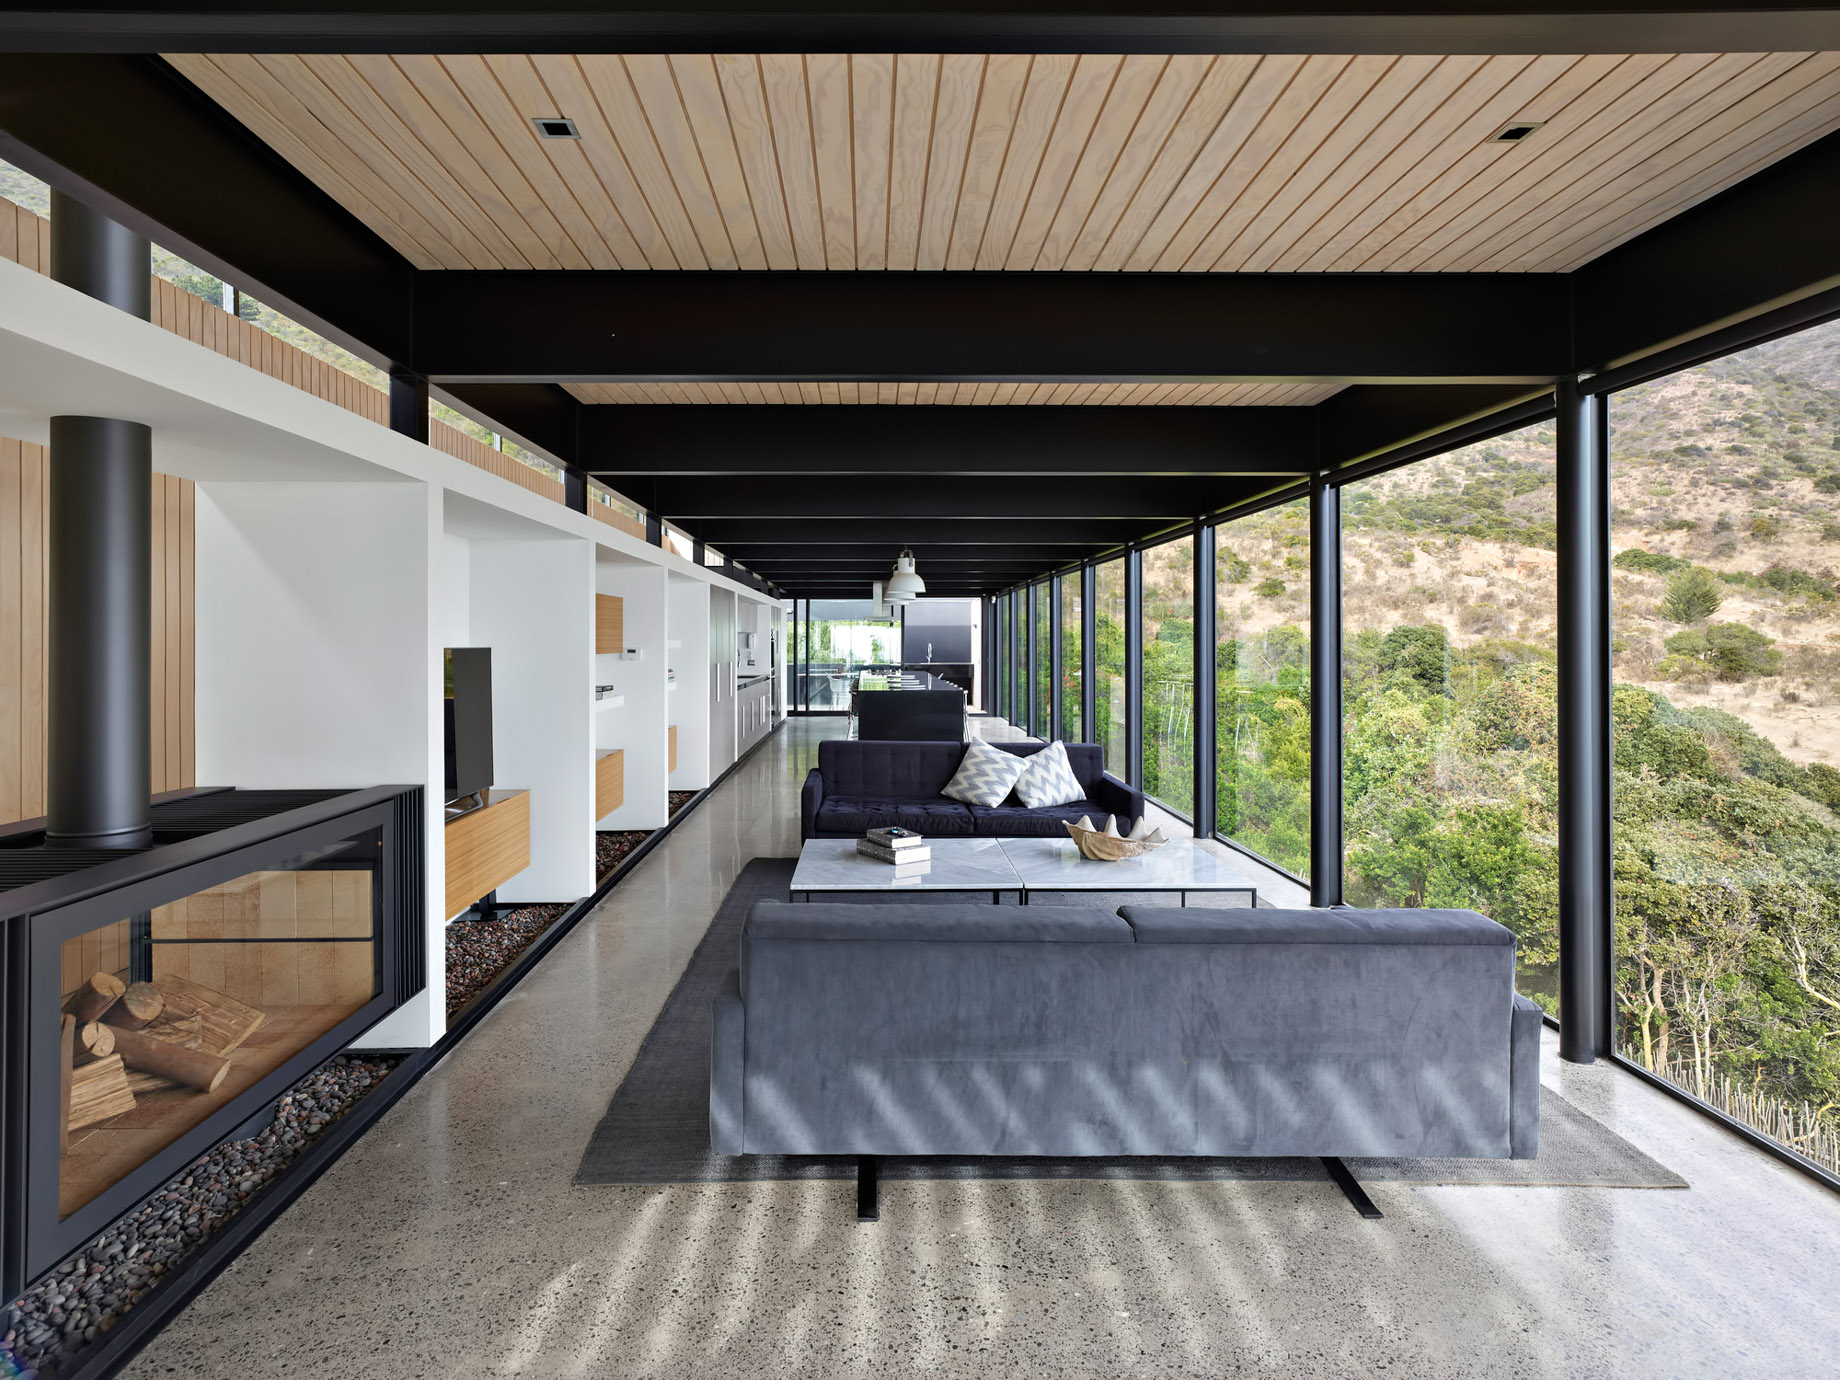 Casa Manns Luxury Residence - Zapallar, Chile